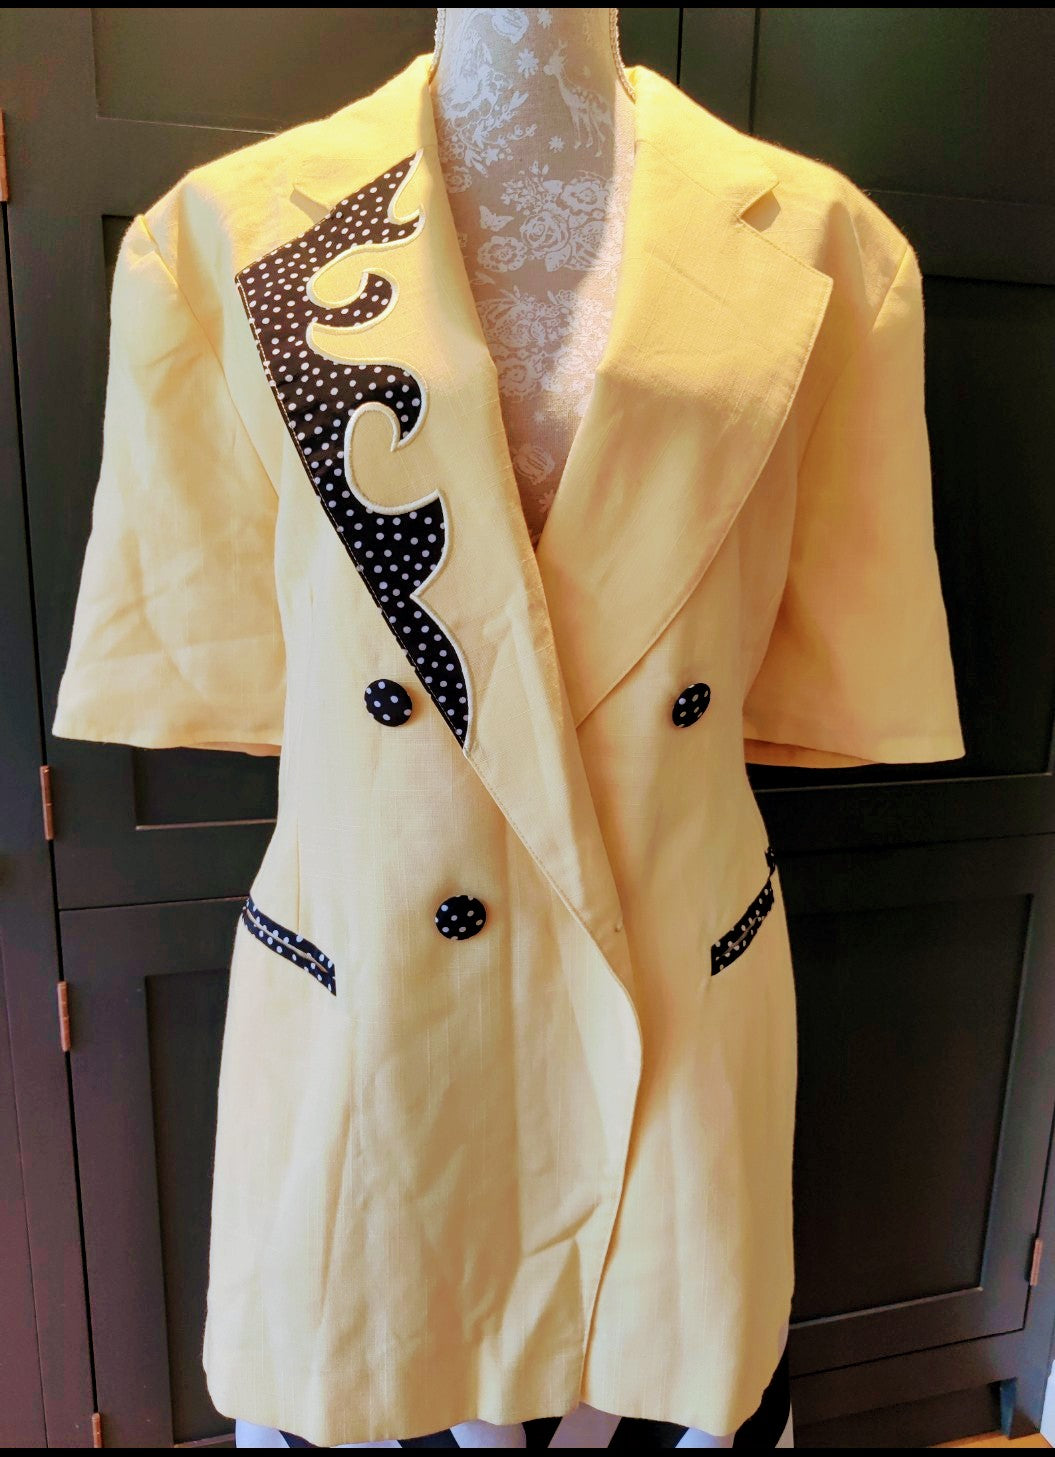 Lemon yellow vintage blazer with black wave applique